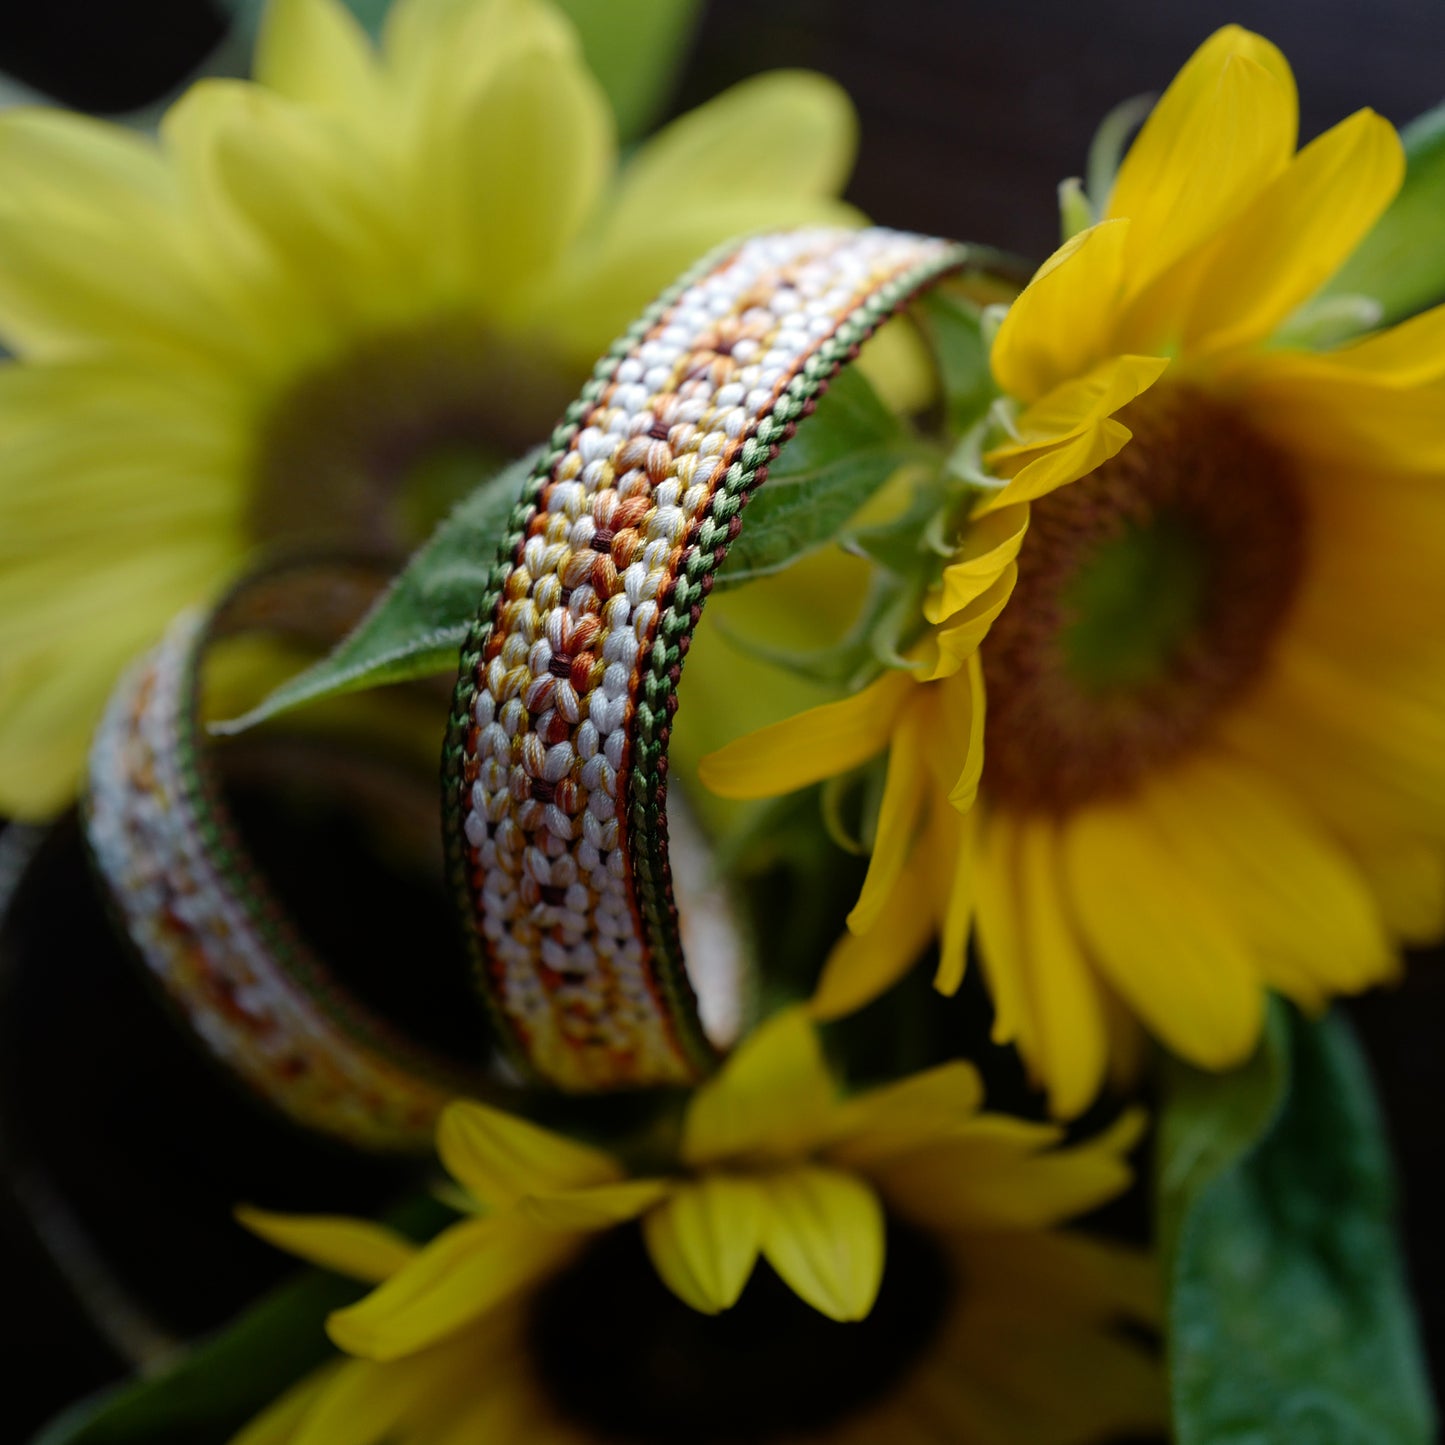 [Made-to-order] Sunny Sunflowers Camera Strap / Hand braiding Silk Kumihimo